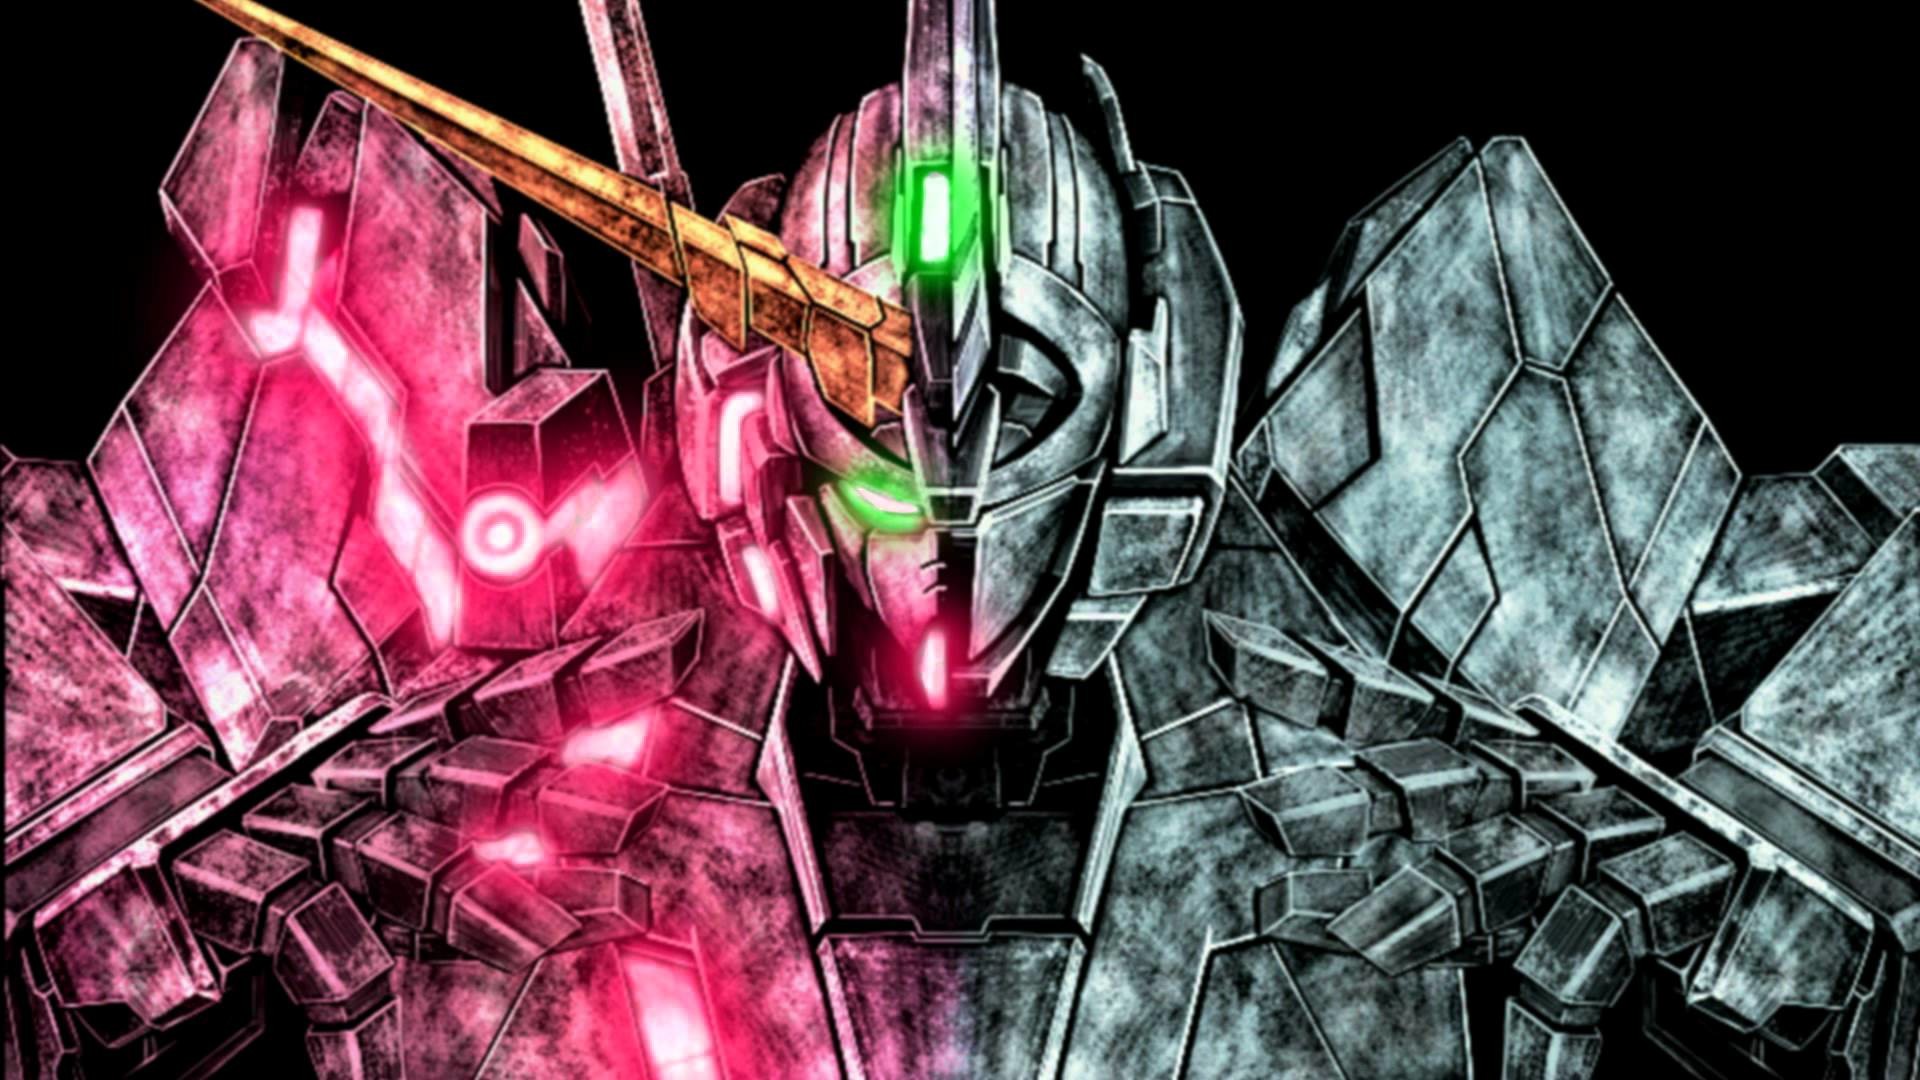 Gundam Unicorn Live Wallpaper